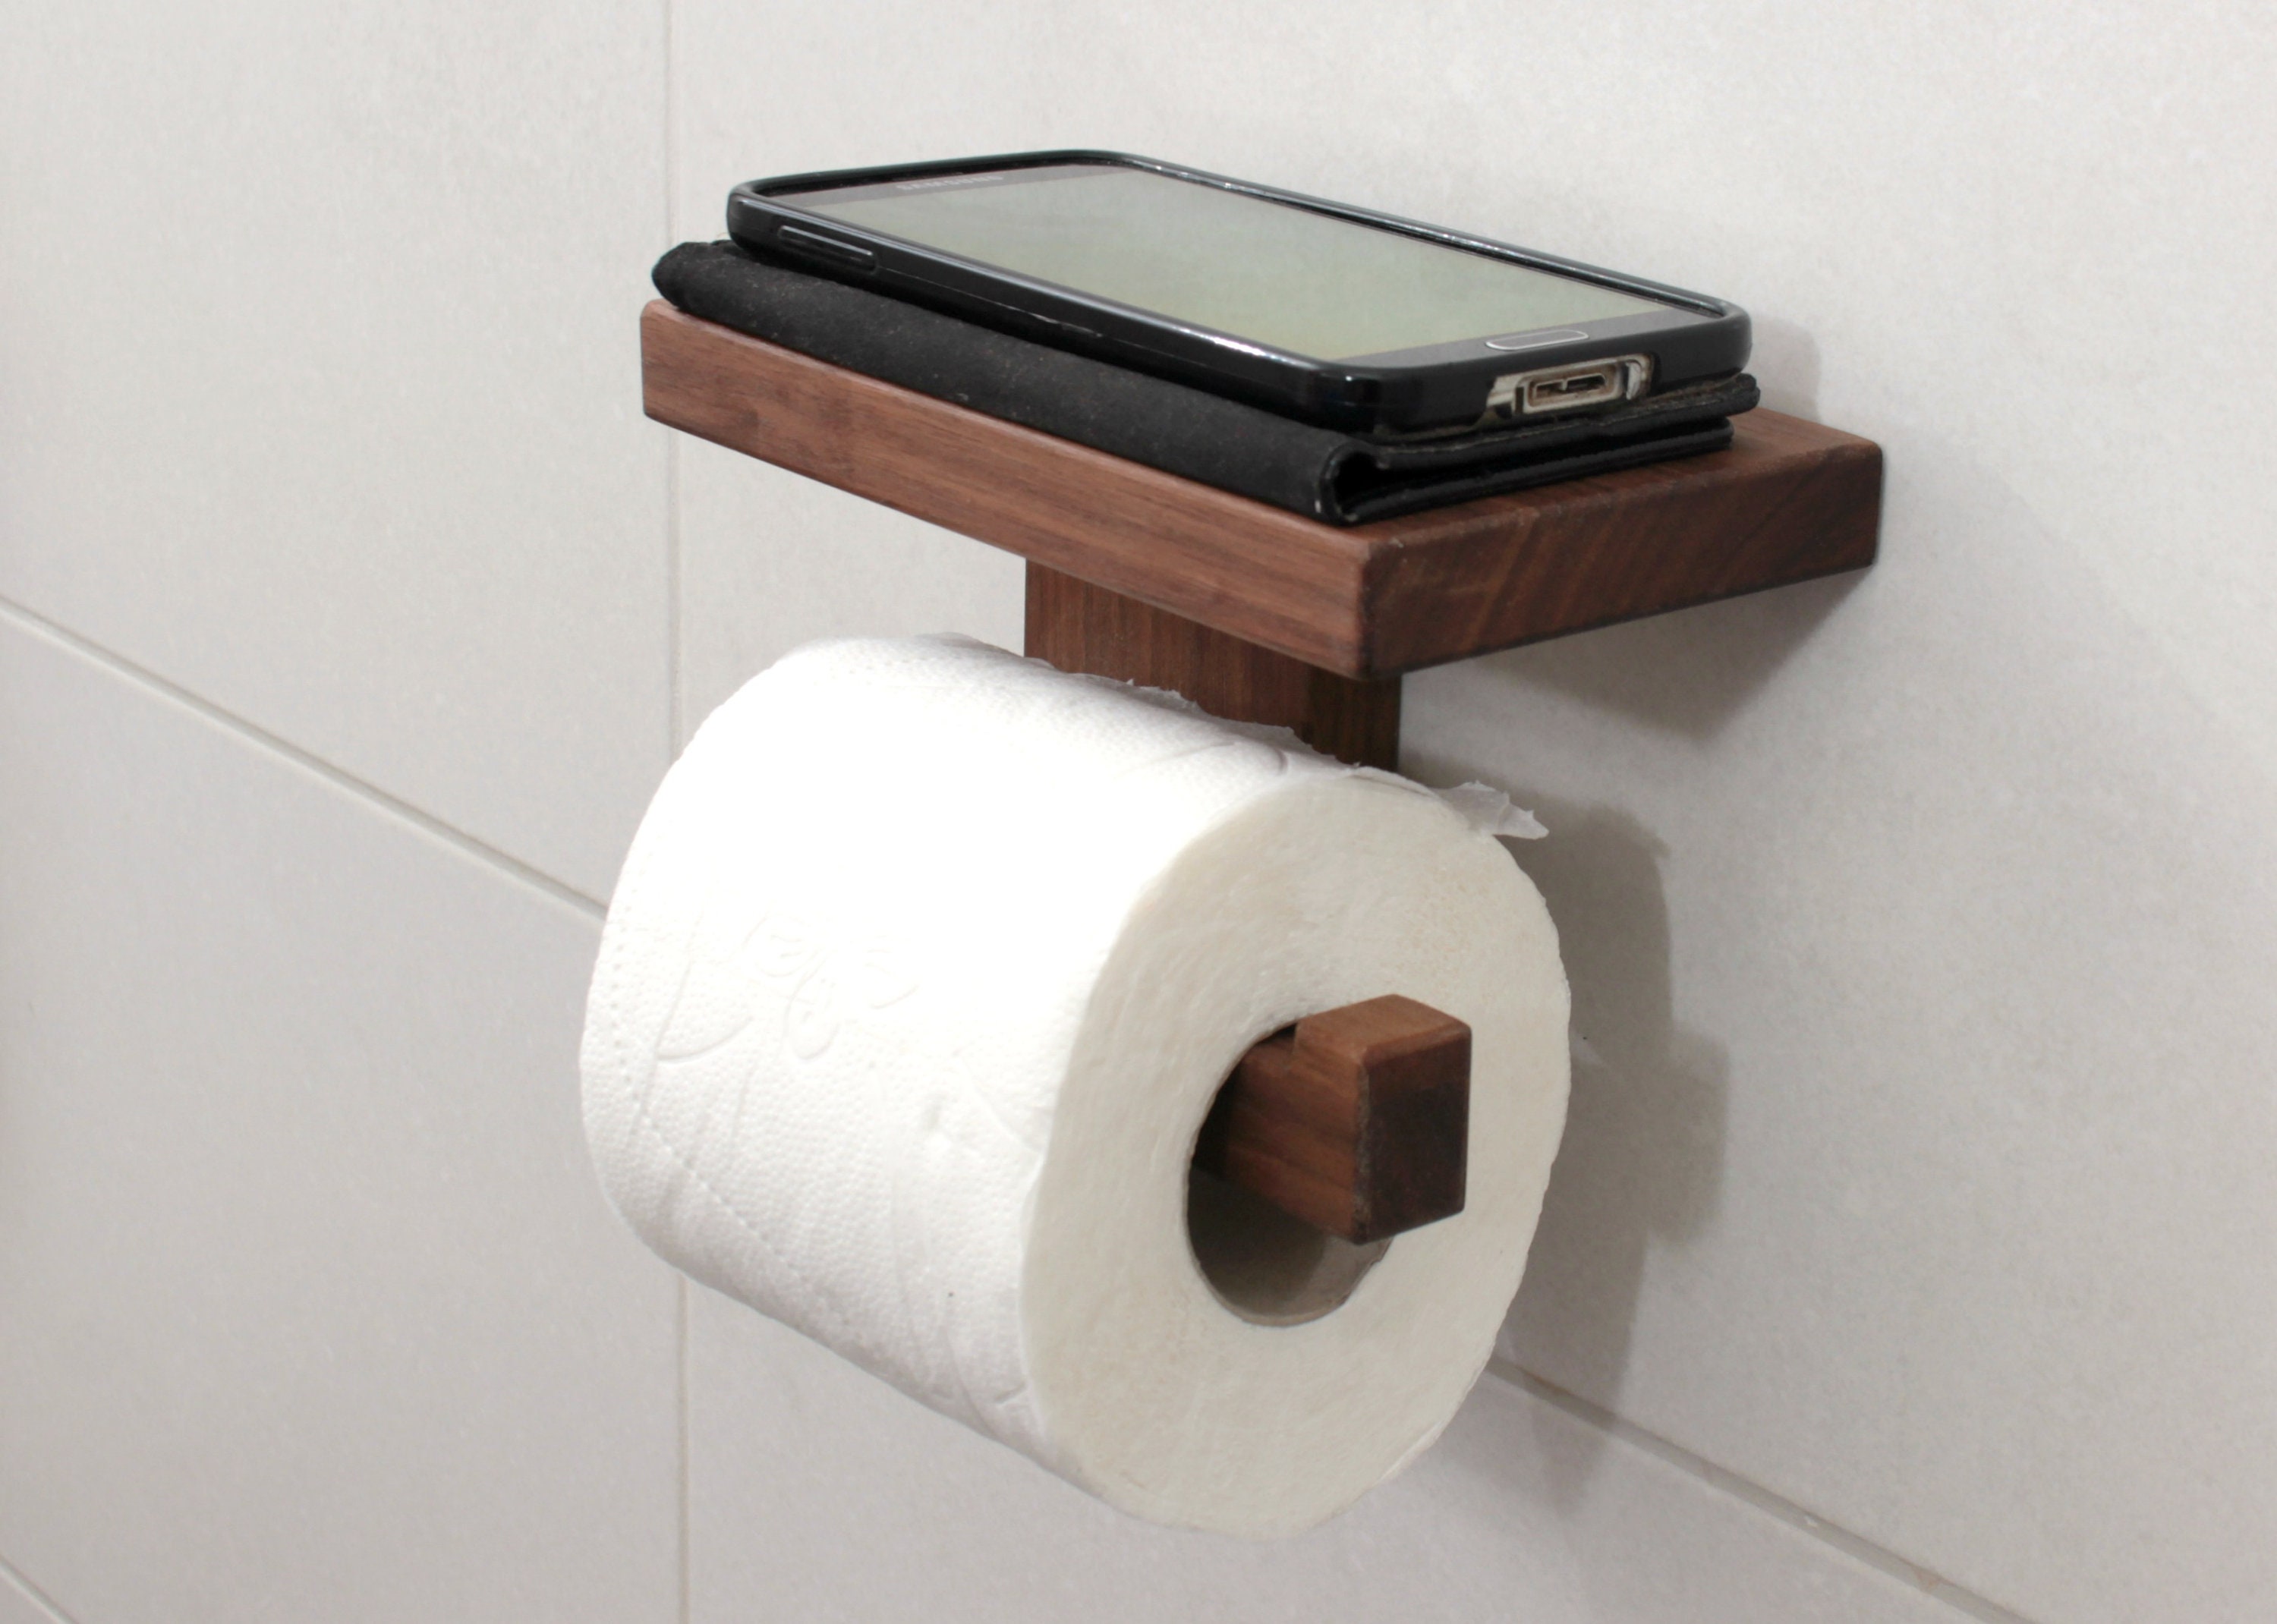 NiHome Toilet Paper Holder with Shelf for Bathroom Farmhouse Rustic Toilet Paper Roll Holder Wall Mount Rustproof Adjustable Easy Tear Walnut